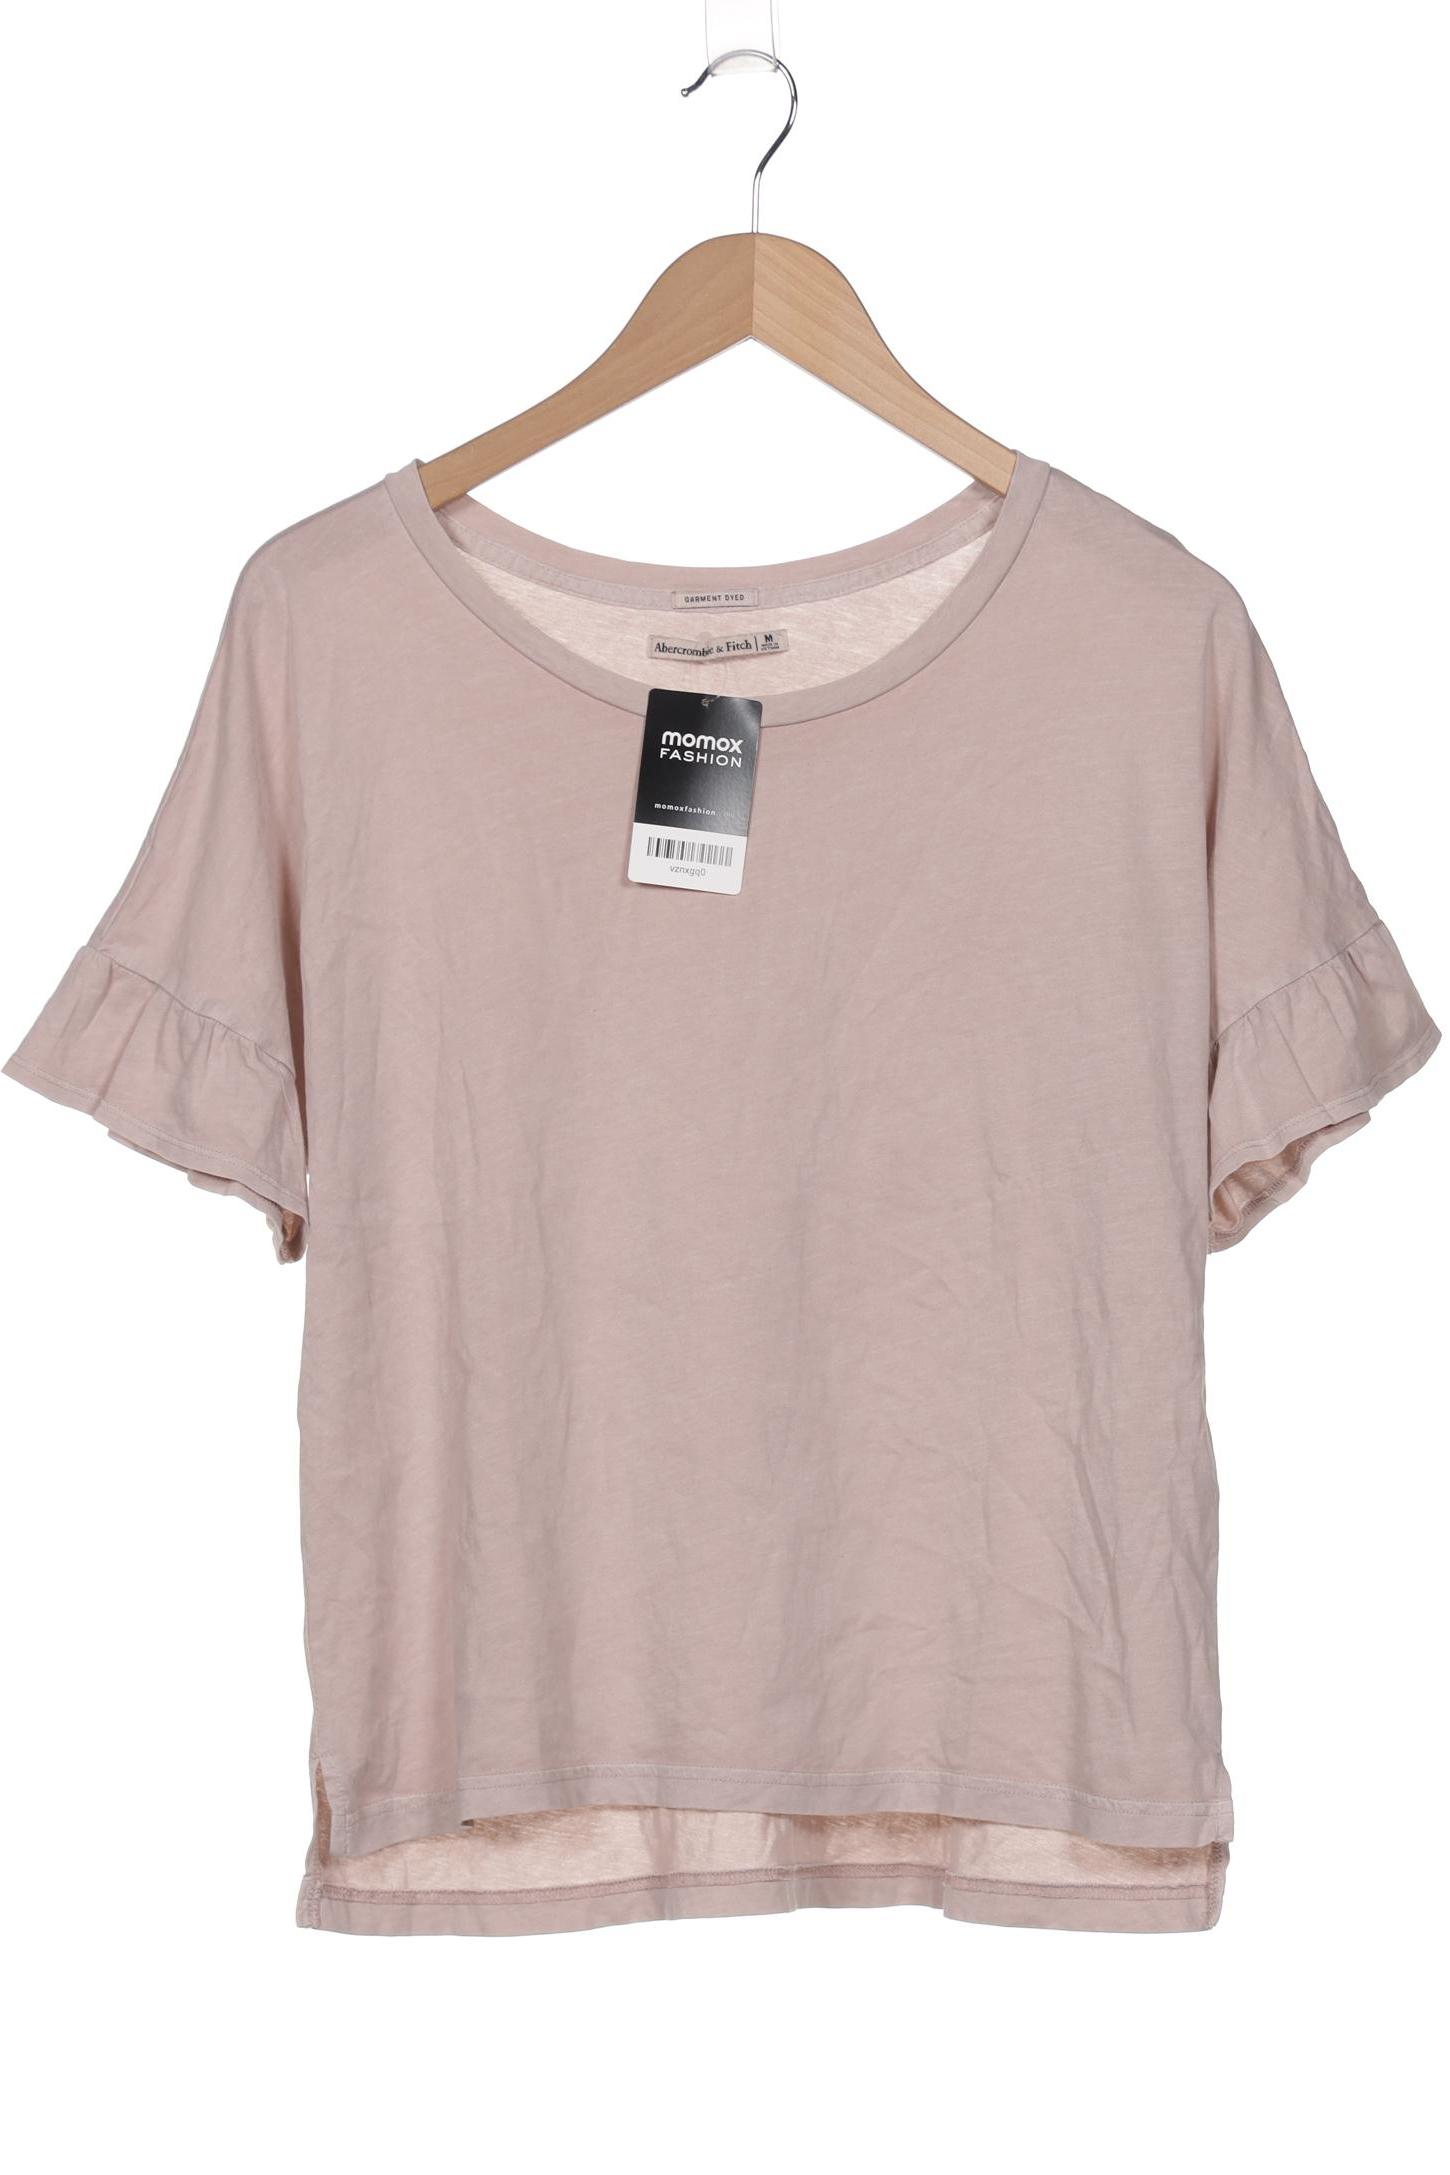 Abercrombie & Fitch Damen T-Shirt, pink von Abercrombie & Fitch